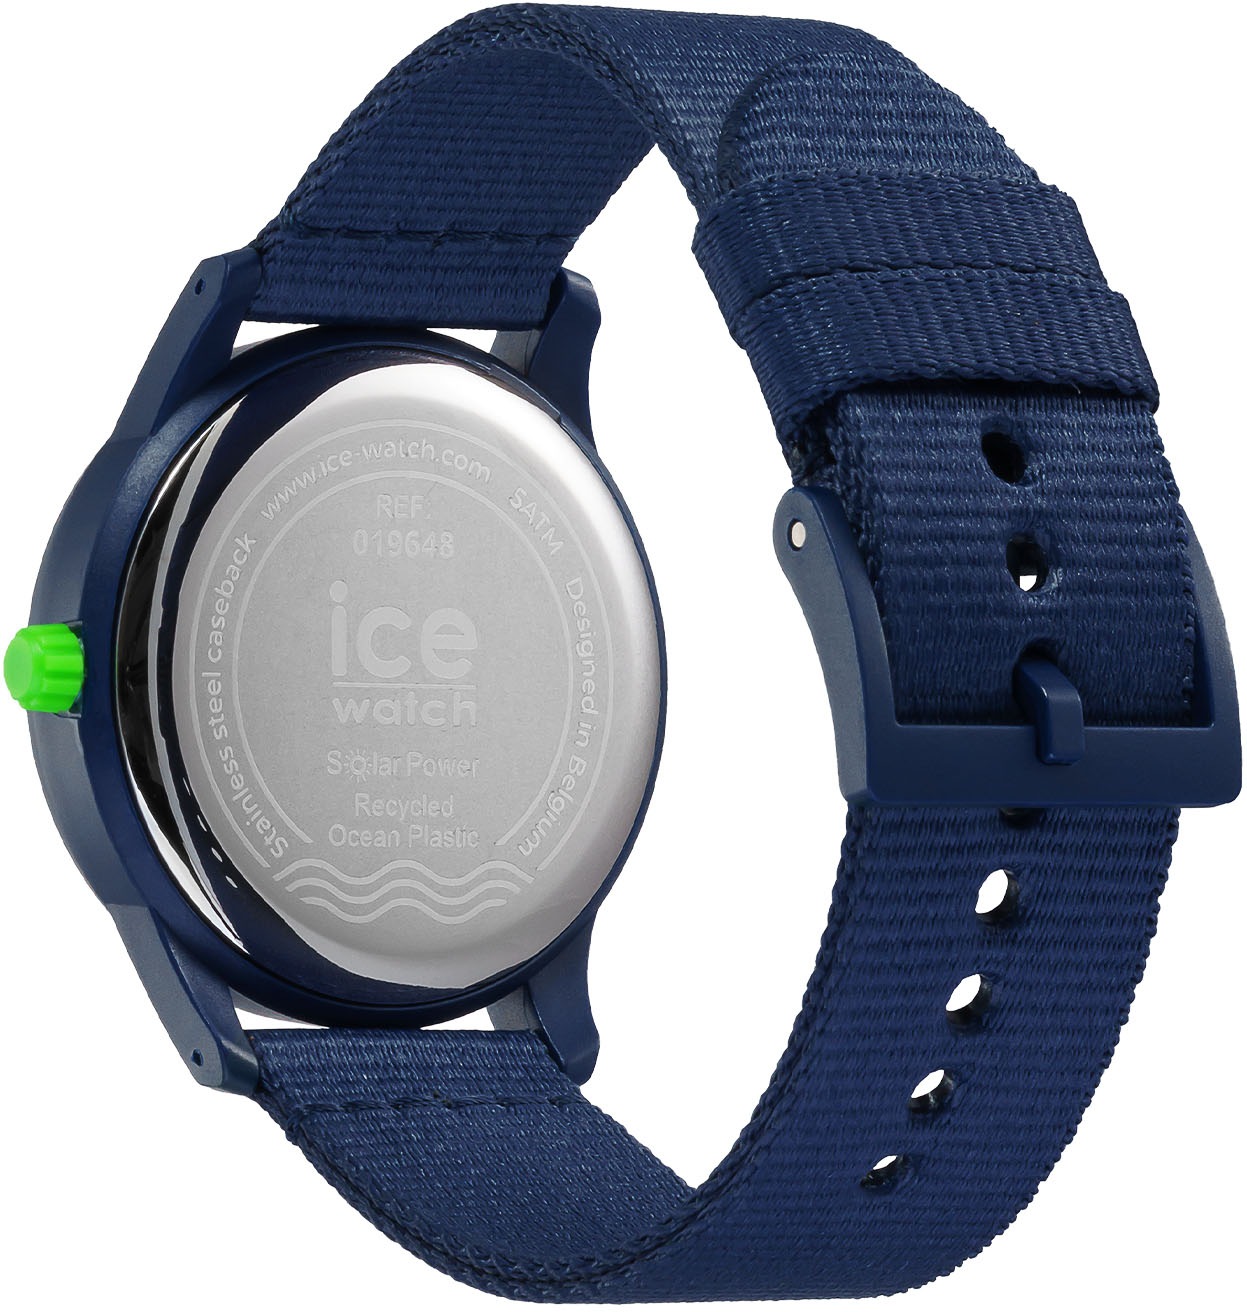 ice-watch Solaruhr »ICE ocean - SOLAR, 019648« bestellen | I'm walking